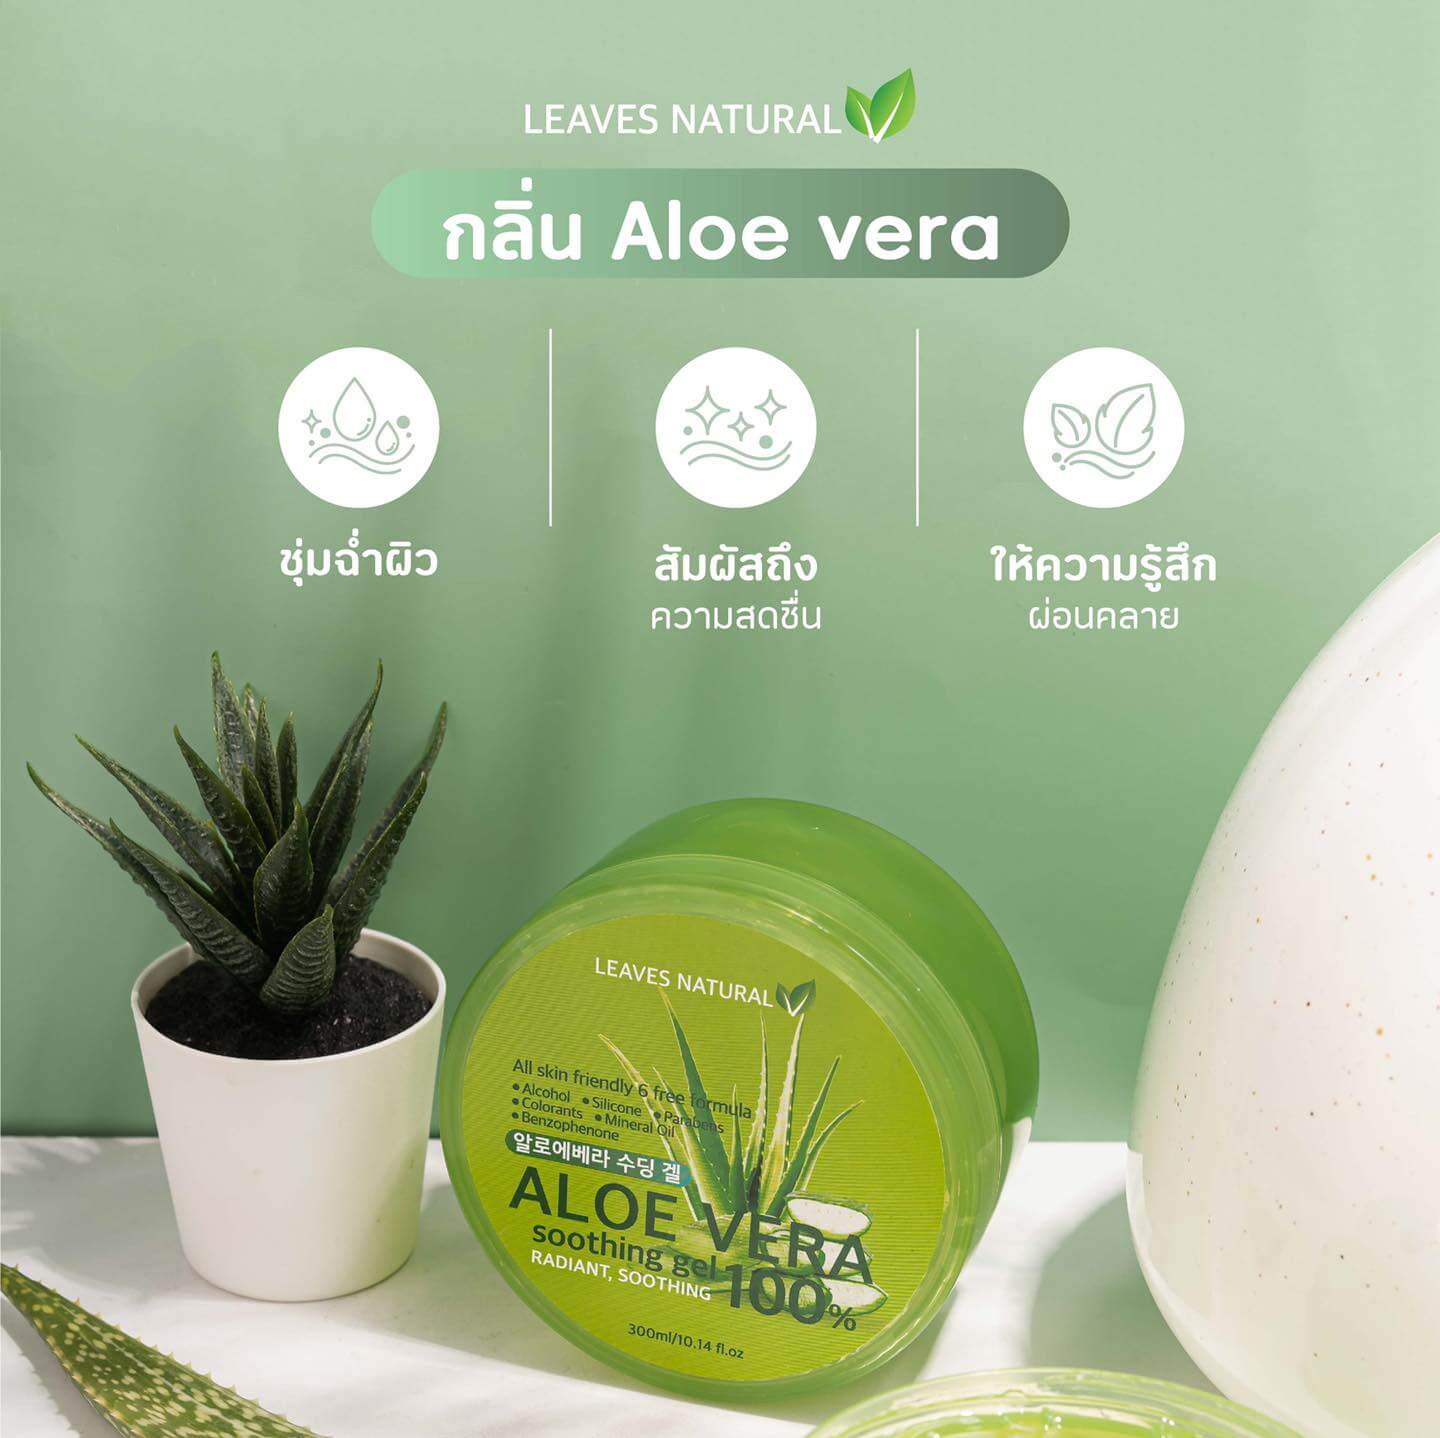 Leaves Natural Aloe Vera Soothing Gel 100% 300 ml  เนื้อเจลซึมง่ายเจลเนื้อบางเบา ซึมซาบเร็ว ไม่เหนียวเหนอะหนะ อ่อนโยนต่อผิว   ไม่ก่อให้เกิดการระคายเคือง ช่วยให้ผิวชุ่มชื่น และช่วยฟื้นฟูผิวที่แห้งกร้าน ให้กลับมาเนียนนุ่ม ดูสุขภาพดีอีกครั้ง สามารถใช้ได้ทั้งผิวหน้า และผิวกาย สารพัดประโยชน์